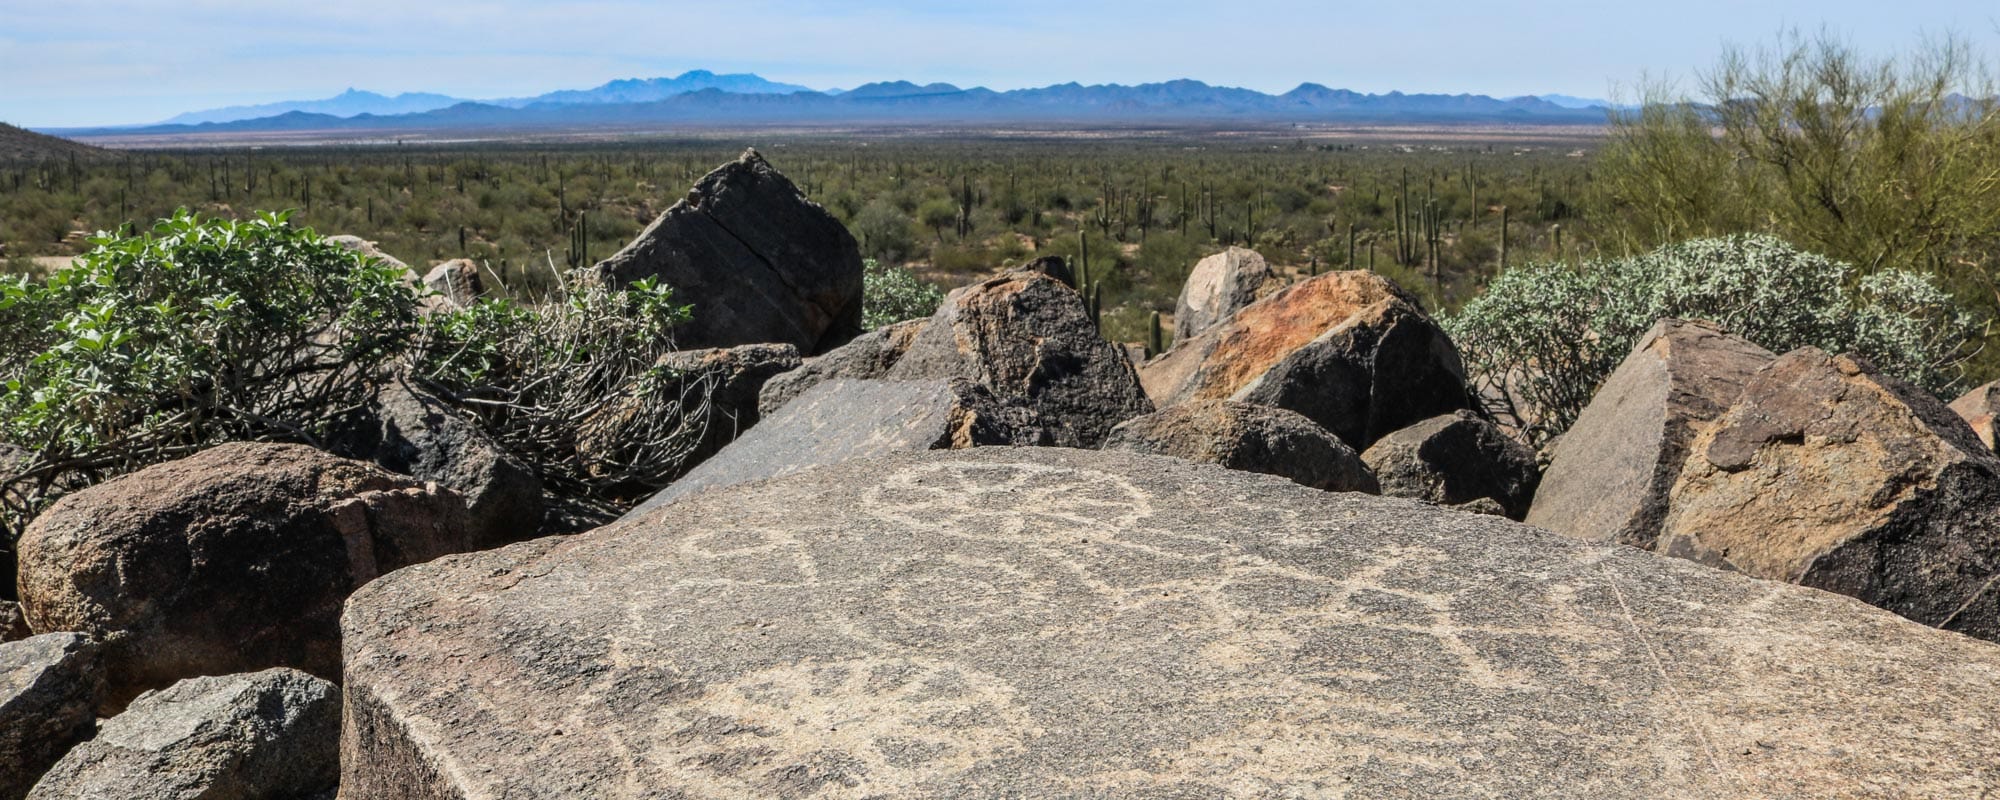 Saguaro National Park - Banner Native American Petroglyphs